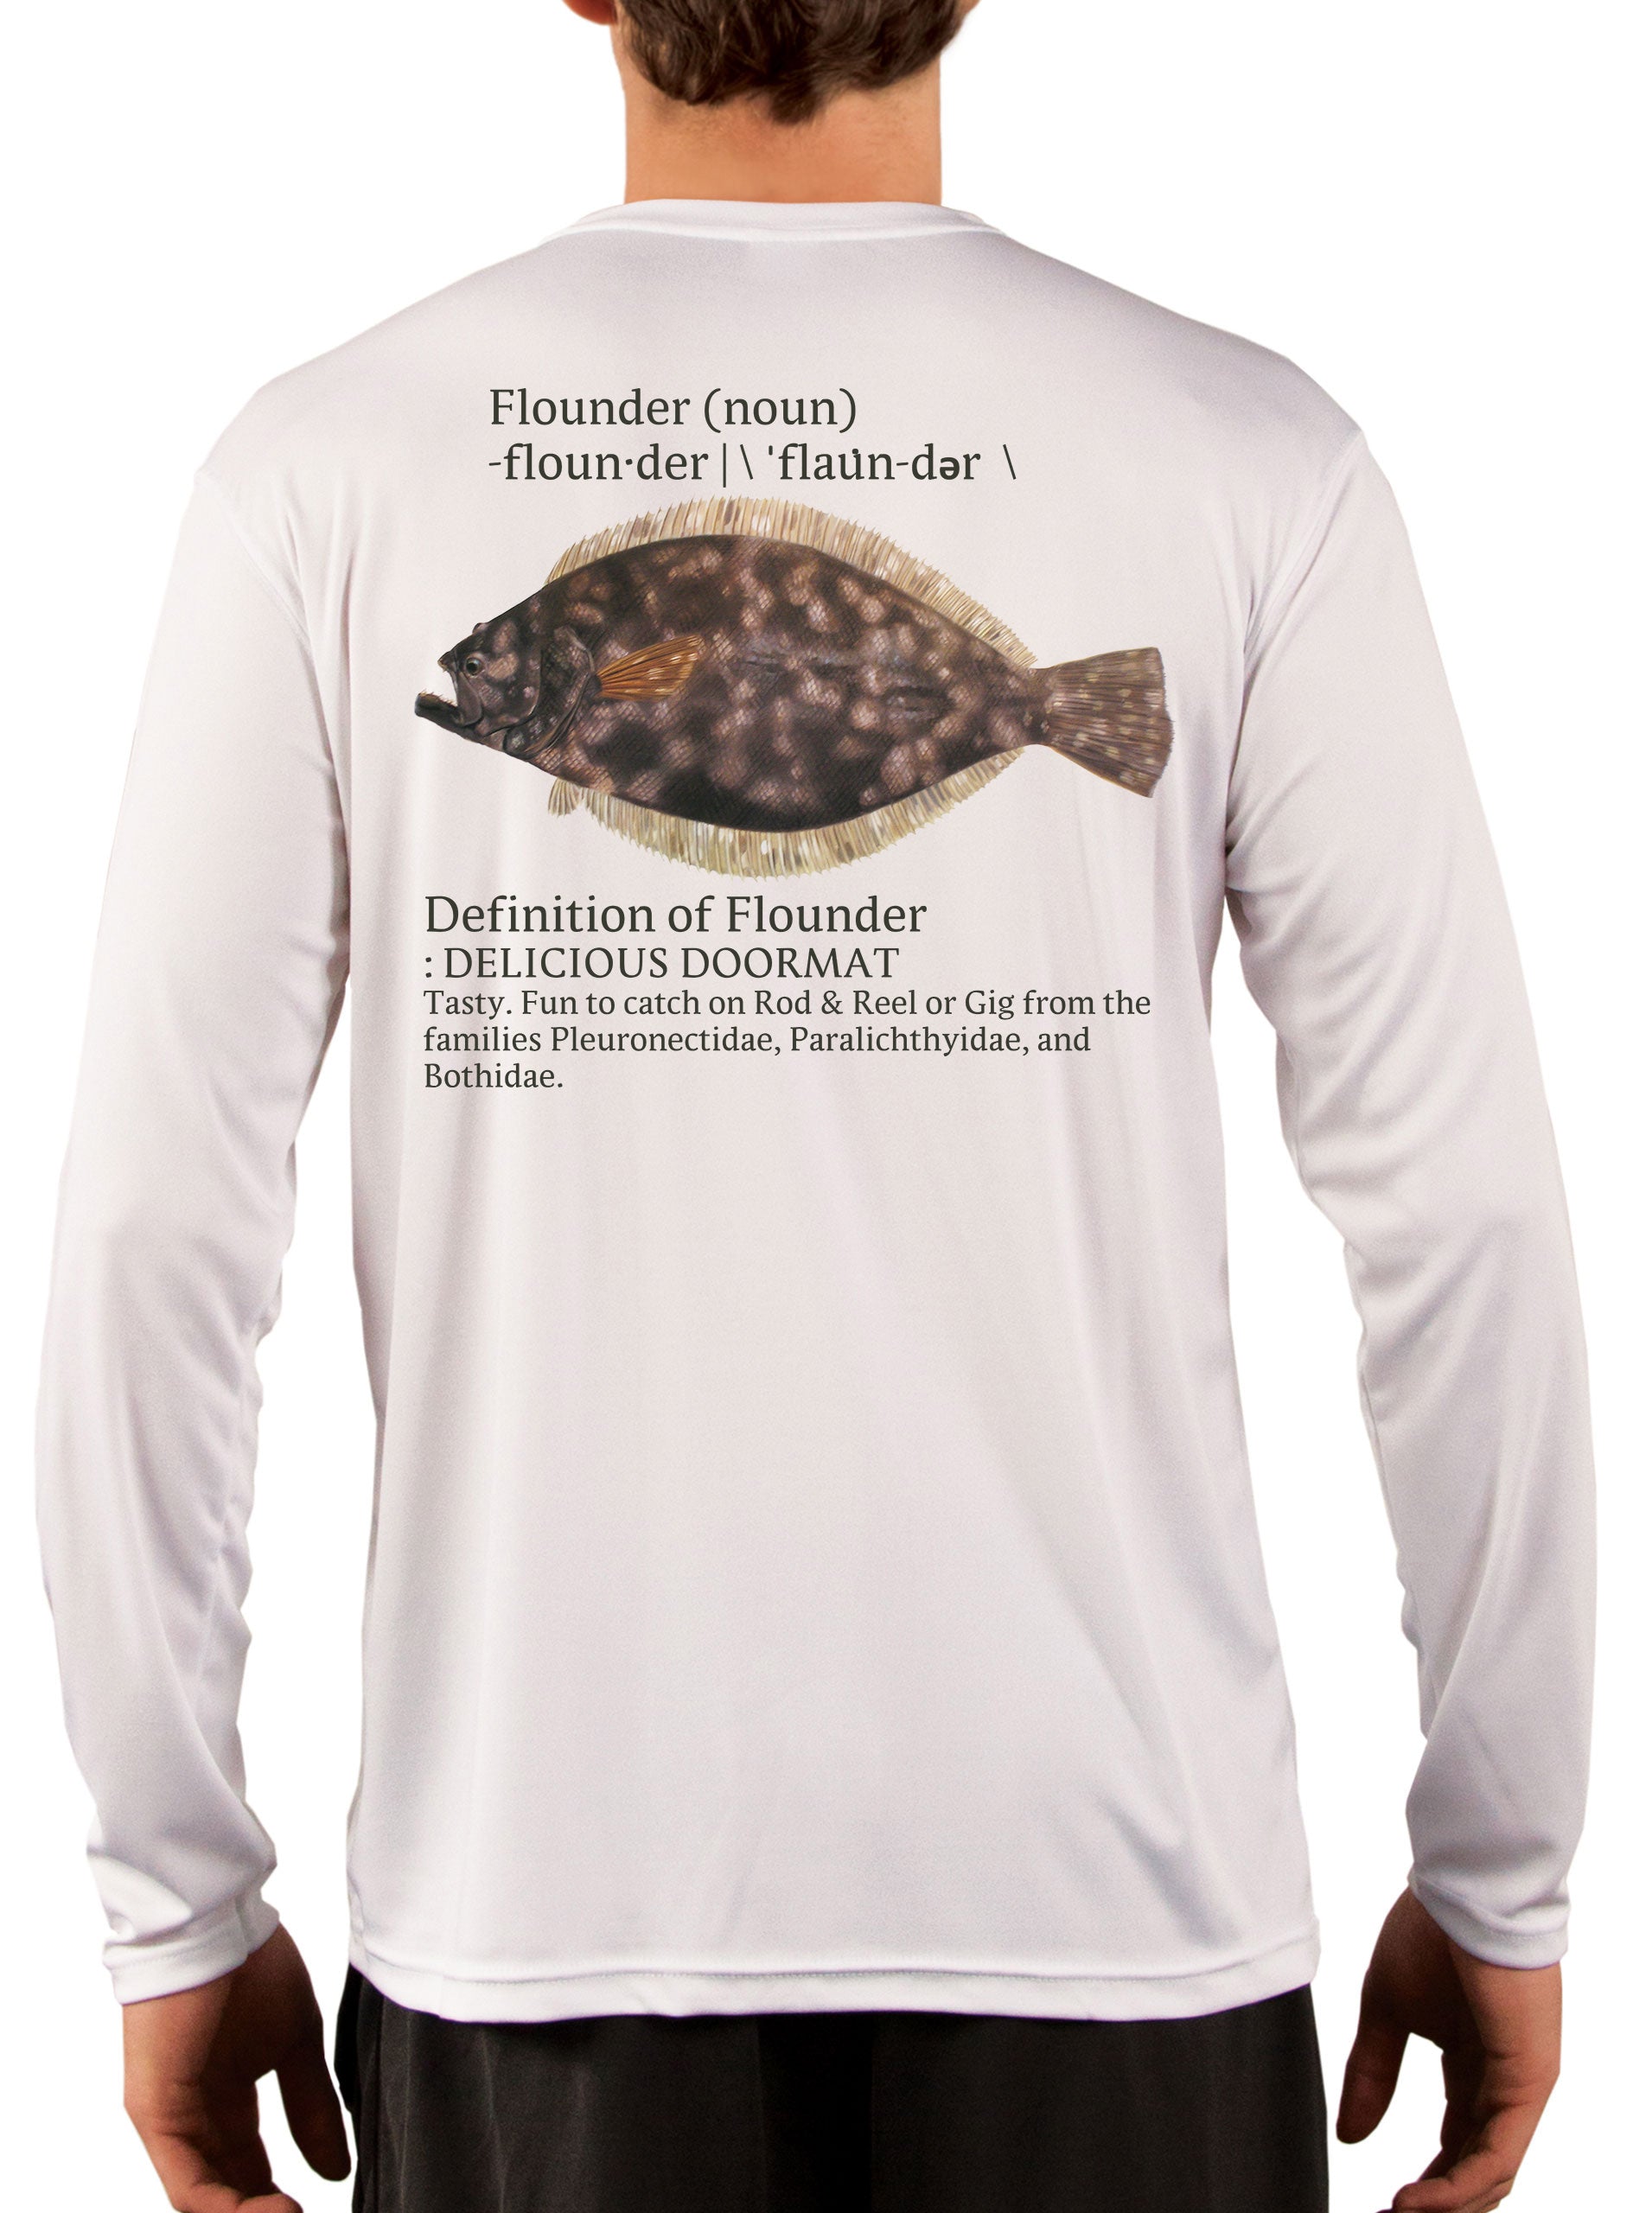 Flounder Fishing Shirts for Men Fluke - UV Protected +50 Sun Protection with Moisture Wicking Technology - Skiff Life